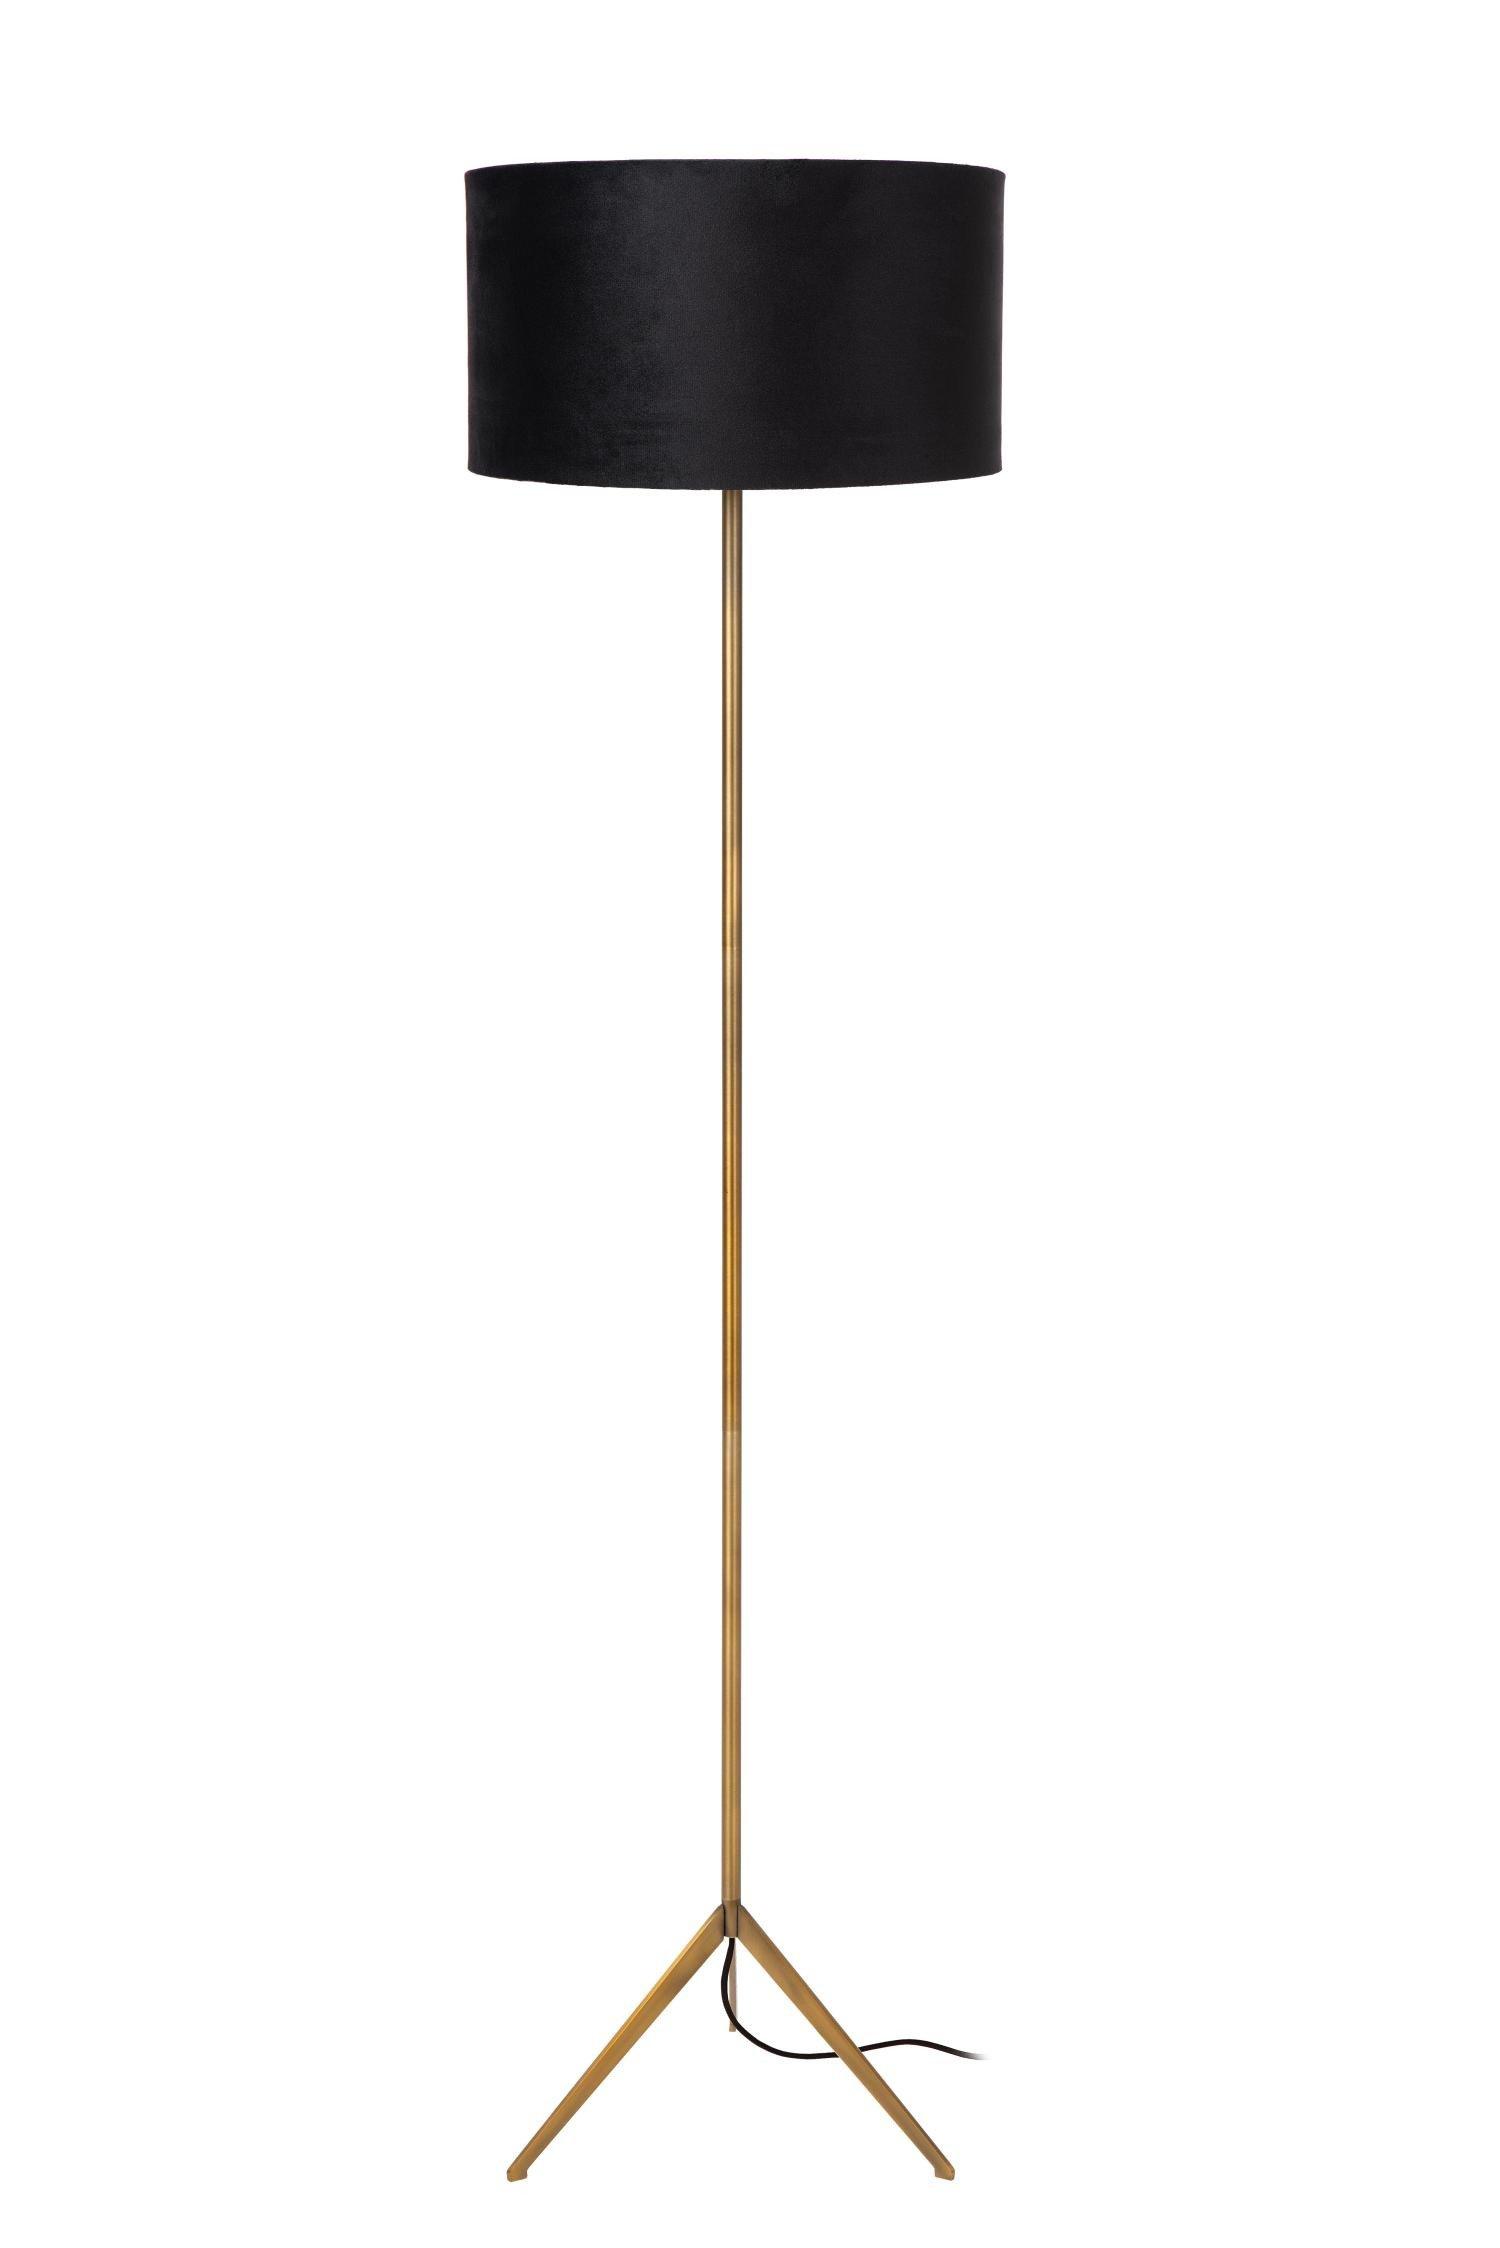 Lucide TONDO Floor Lamp E27 Round Shape Free Standing Indoor Lighting - 38 cm